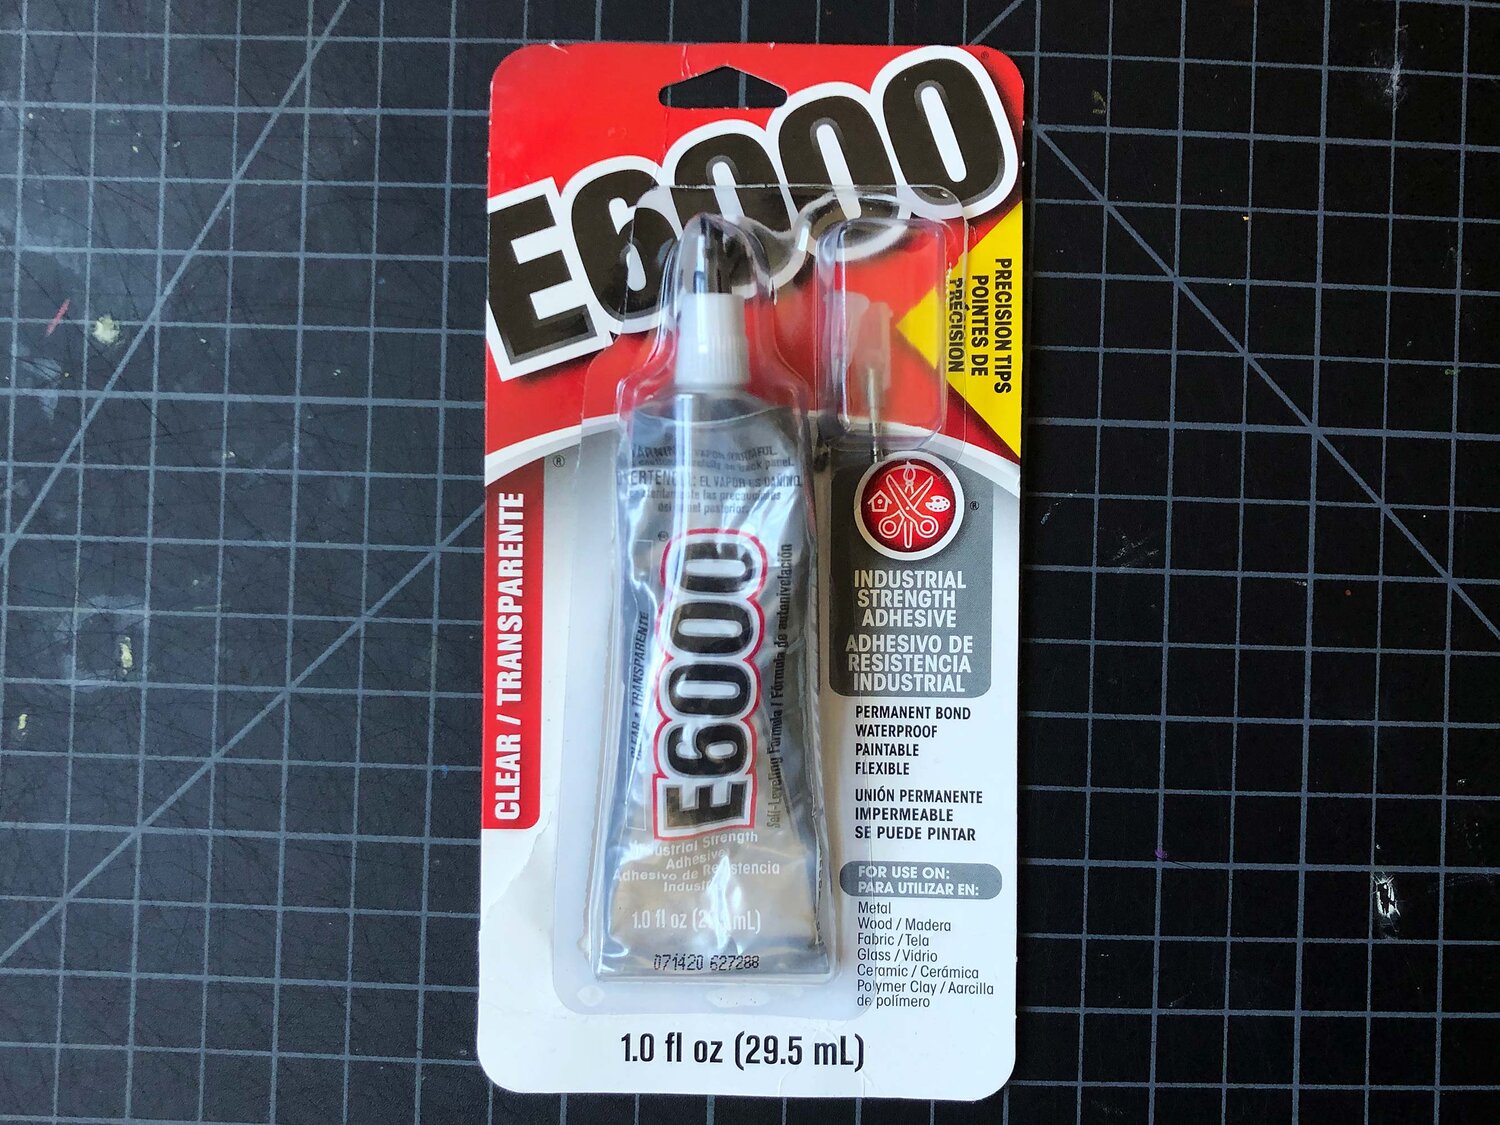 E6000 Glue Multi-purpose Adhesive E6000 Glue For Sale UK